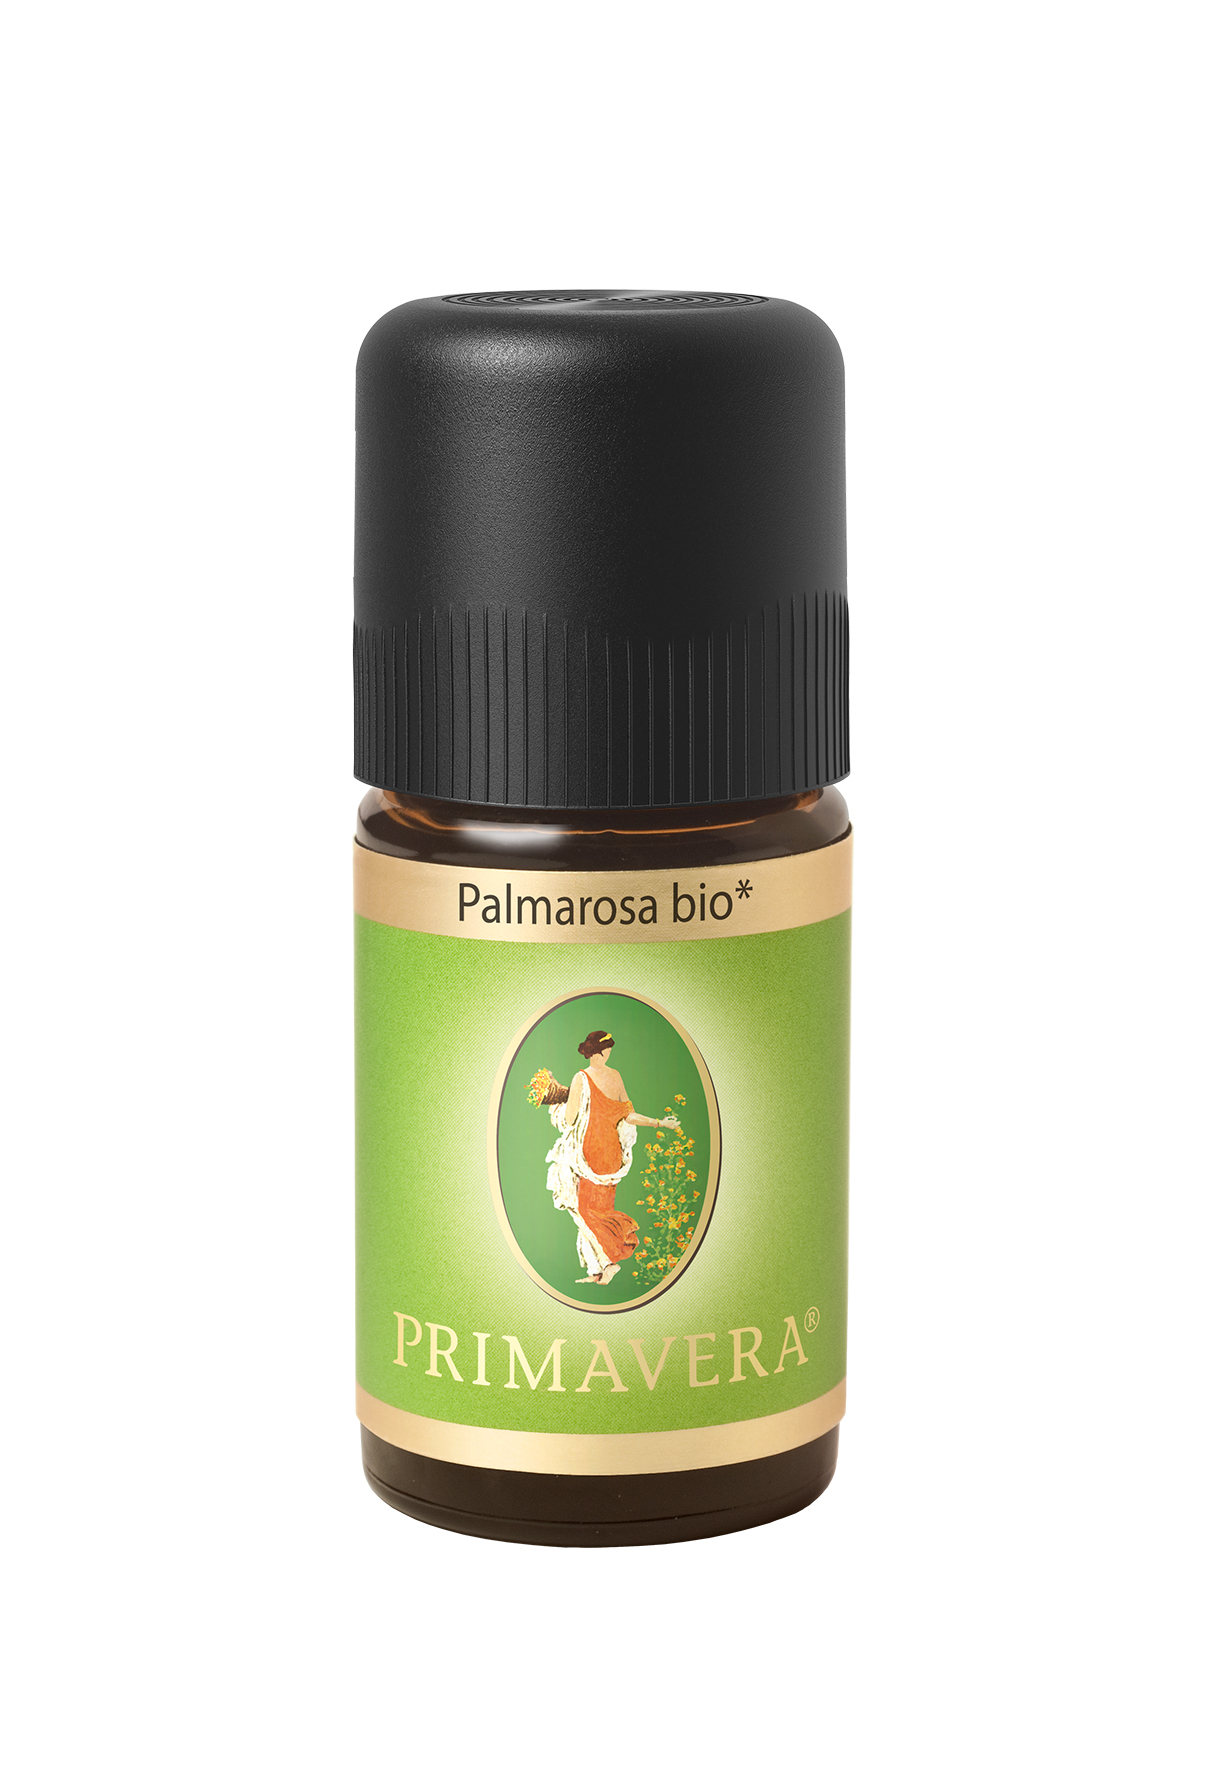 Primavera® Ätherisches Öl, Palmarosa bio